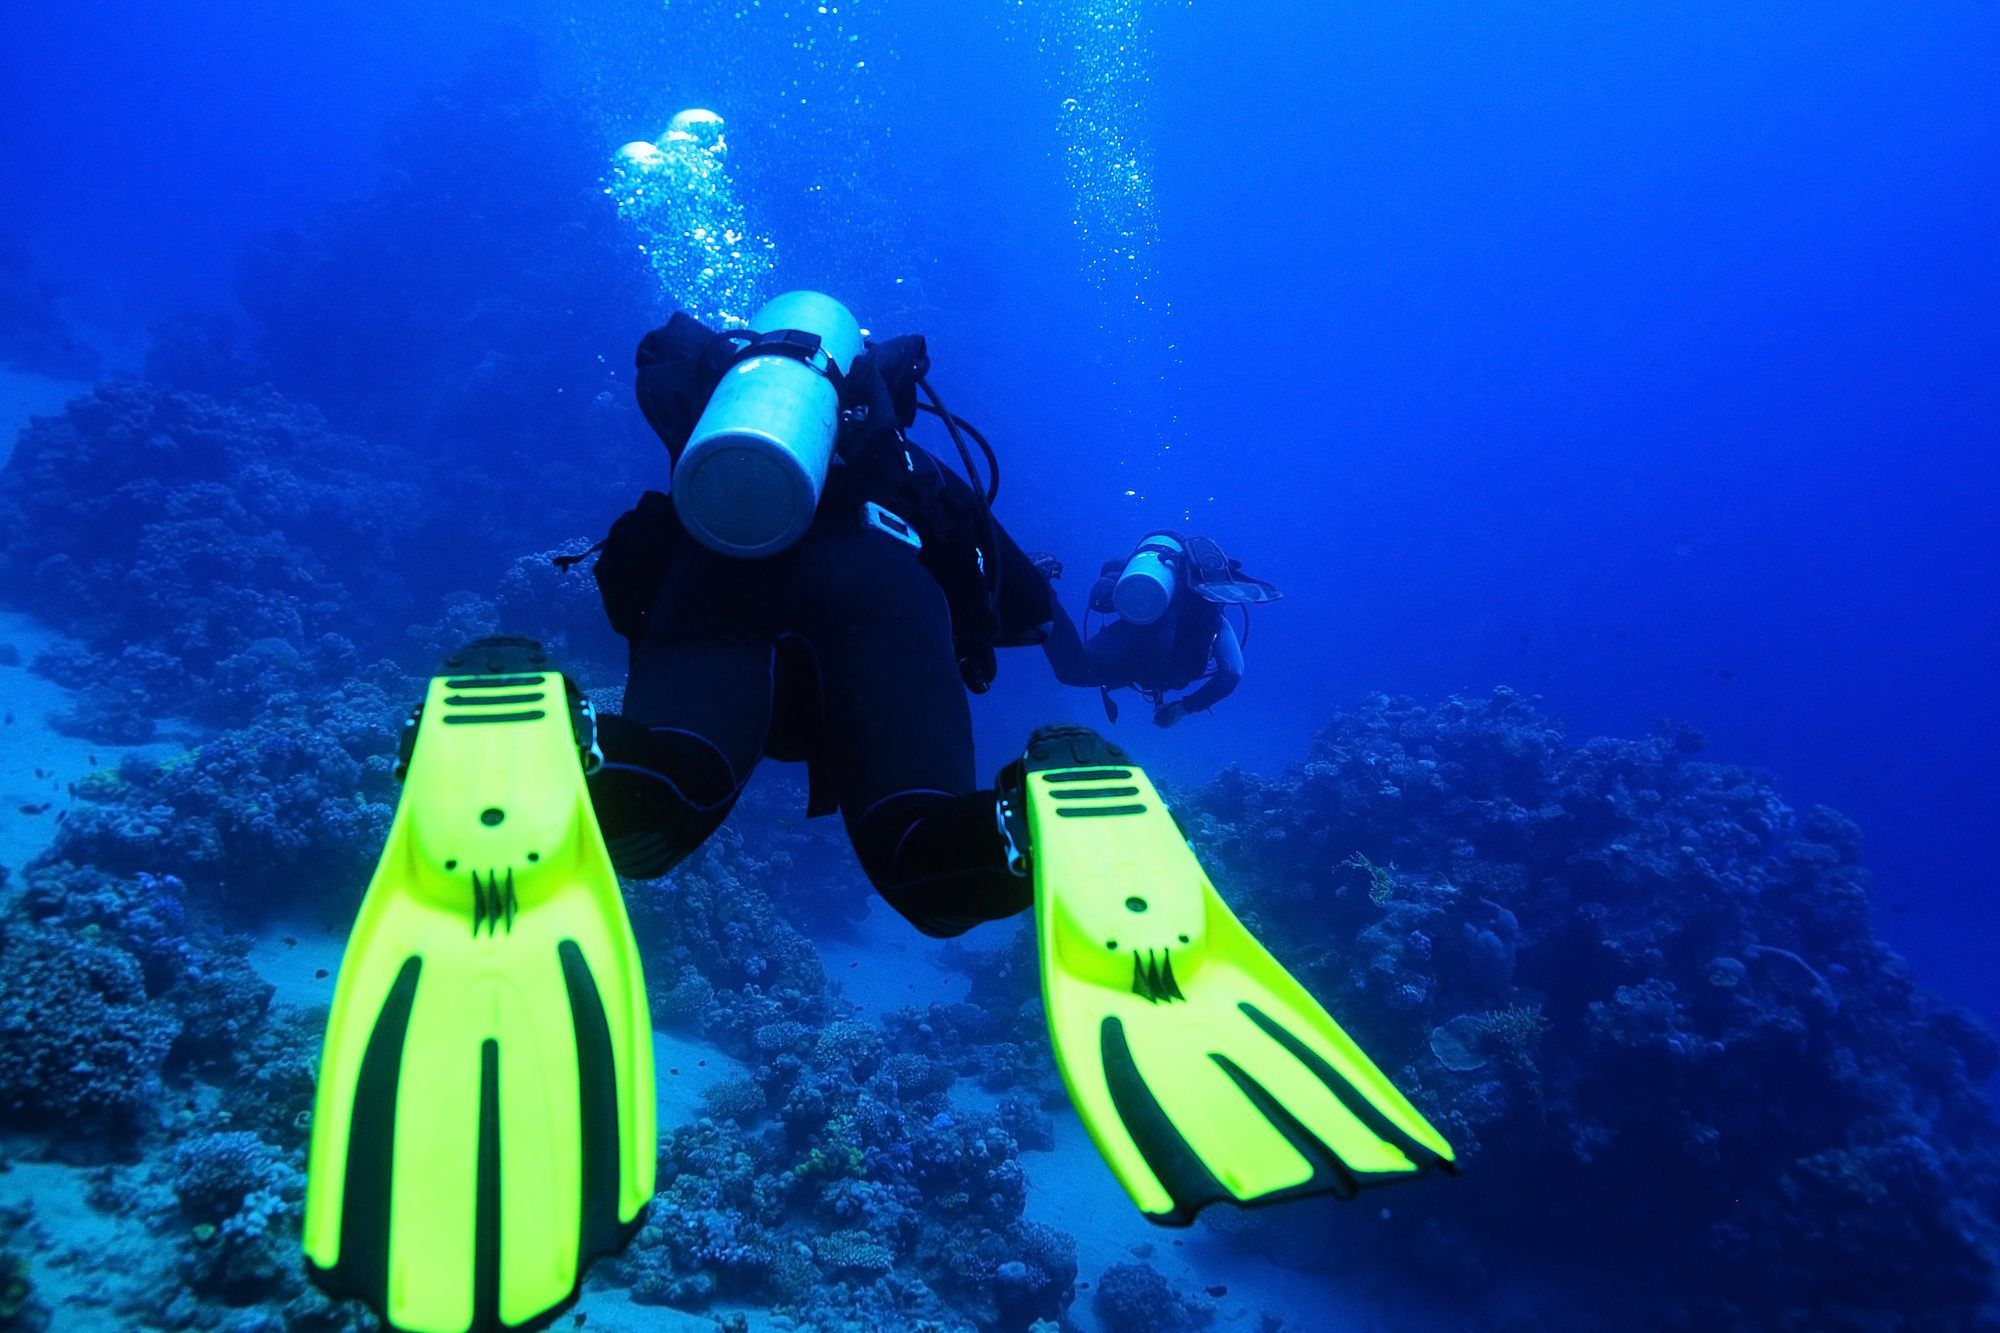 A scuba diver swimming regarding the Suunto defective dive computer class action lawsuit filed